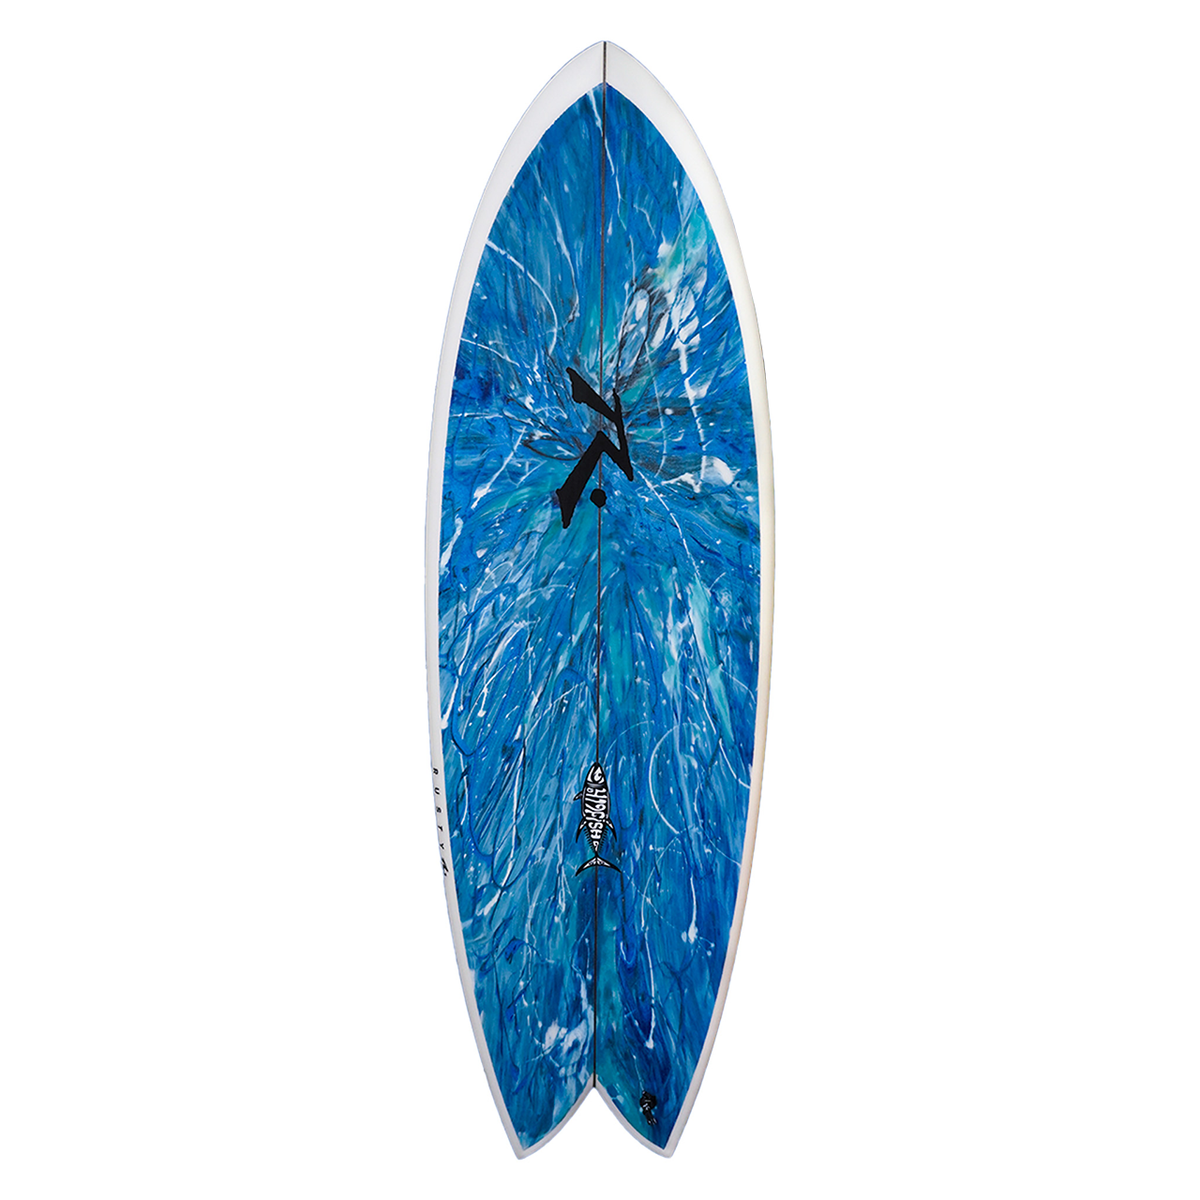 419fish - Alternative - Rusty Surfboards - Top View - Dark Blue